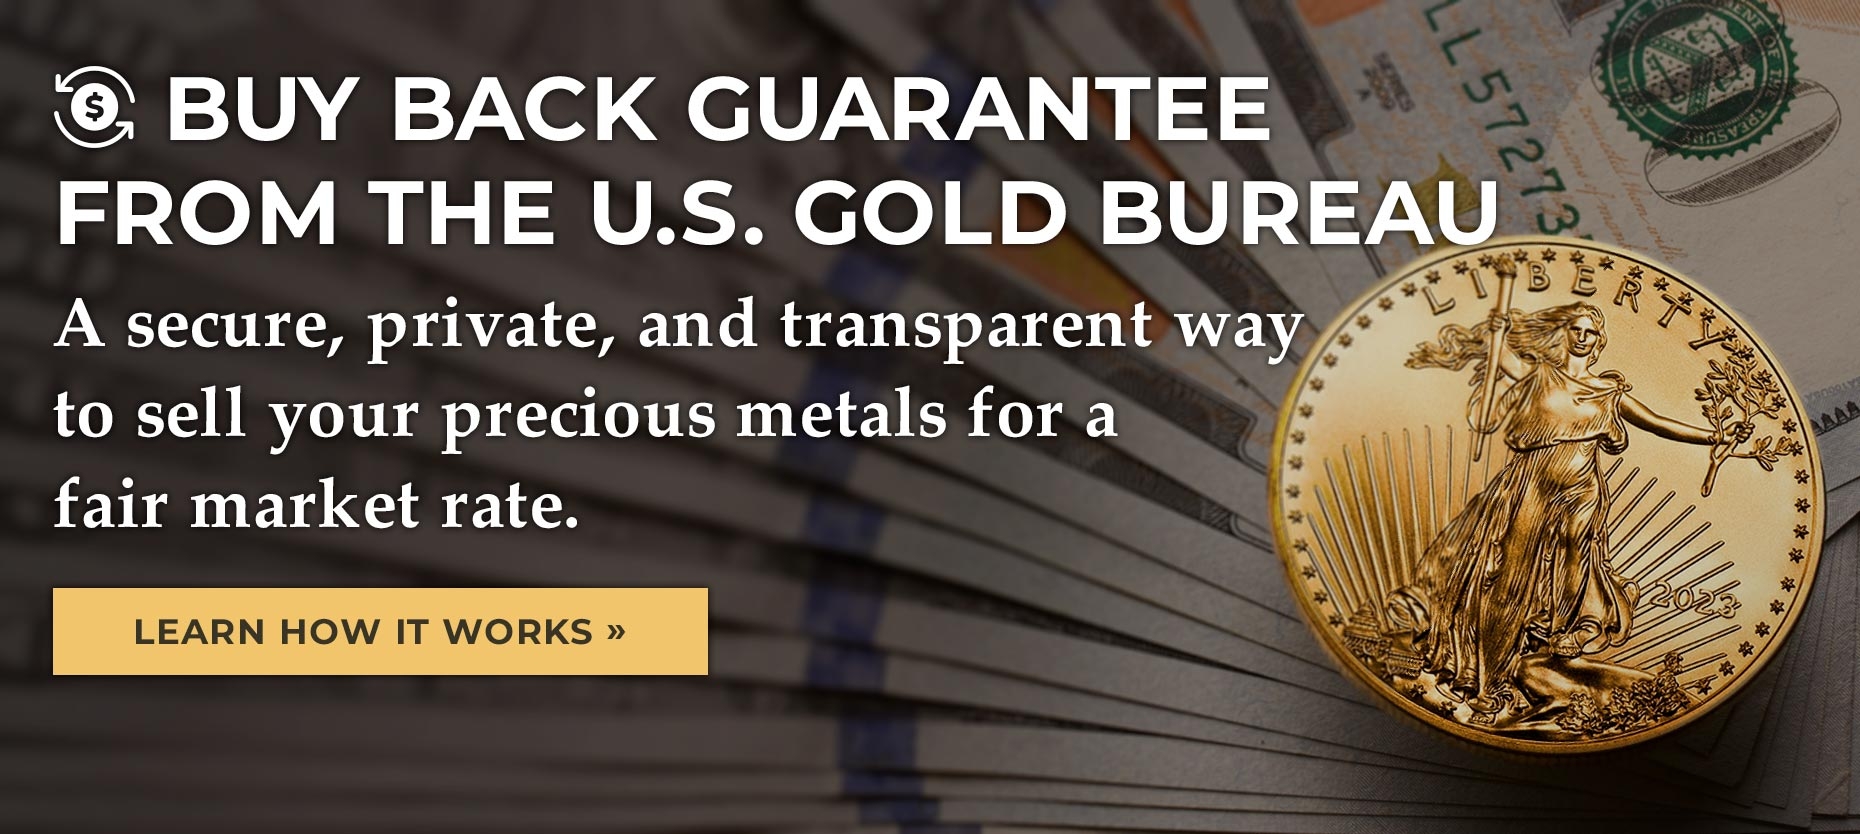 Buy Back Guarantee From The U.S. Gold Bureau